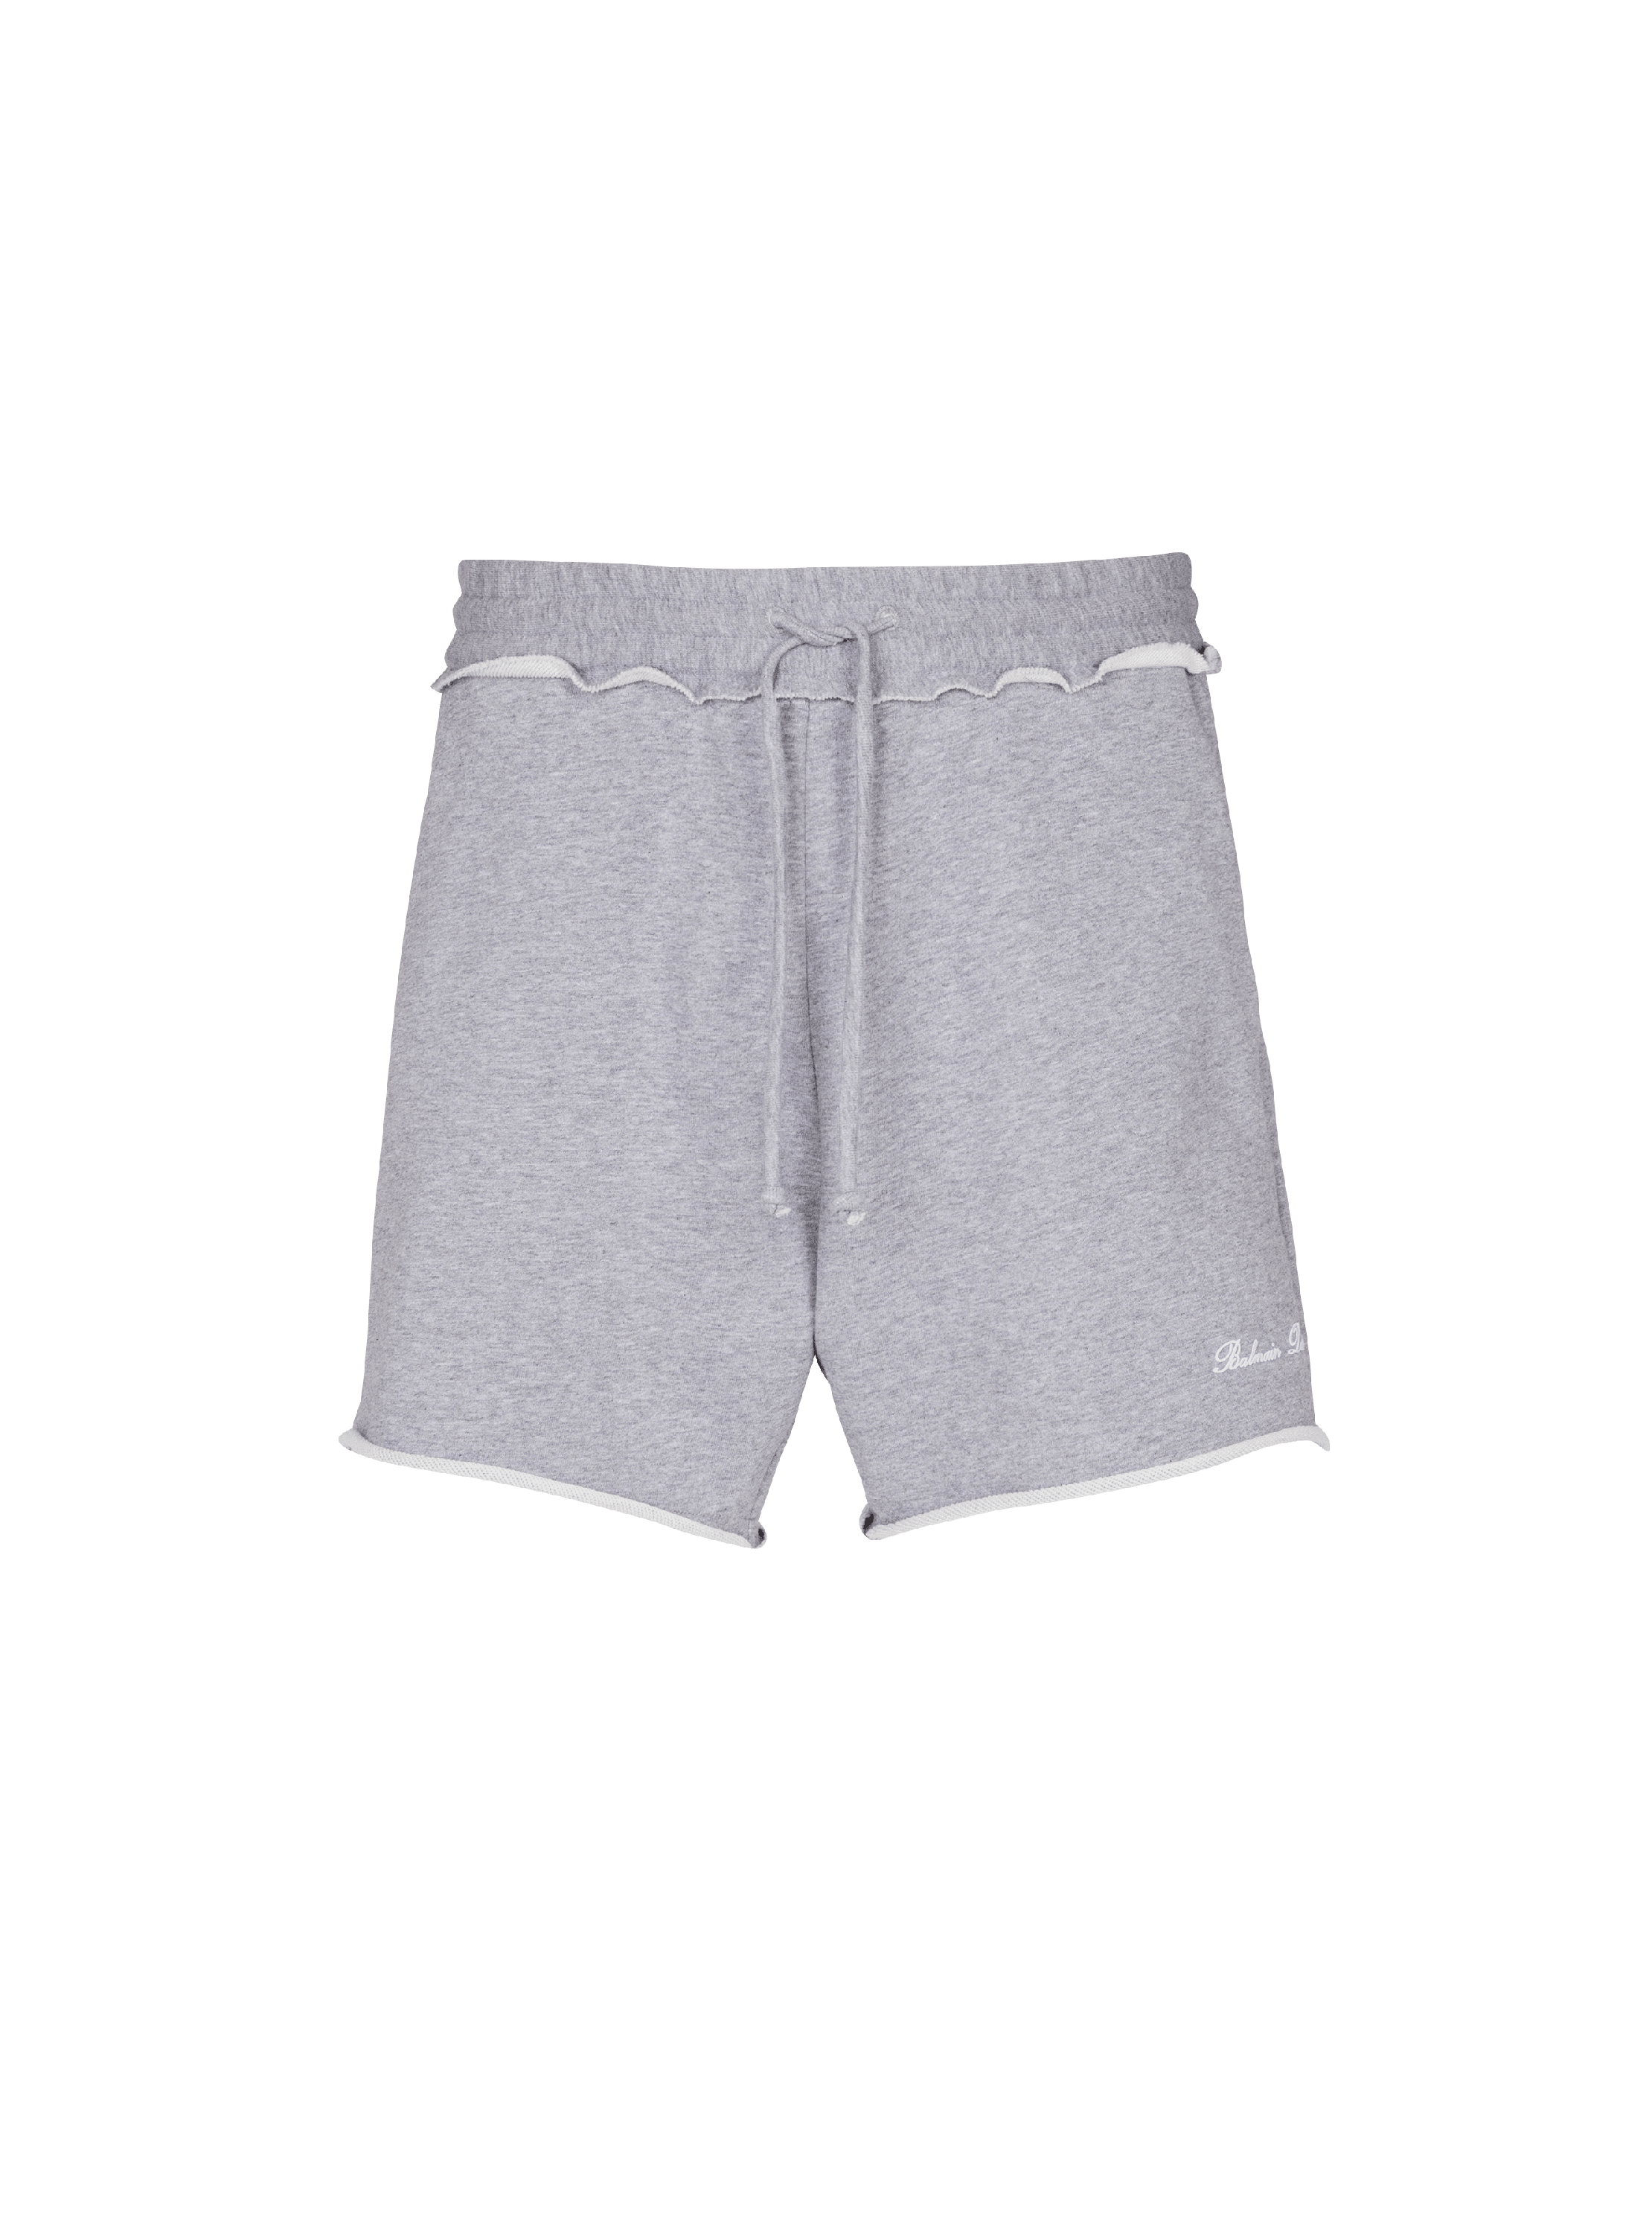 Pantalones cortos de muletón Balmain Signature, gris, hi-res